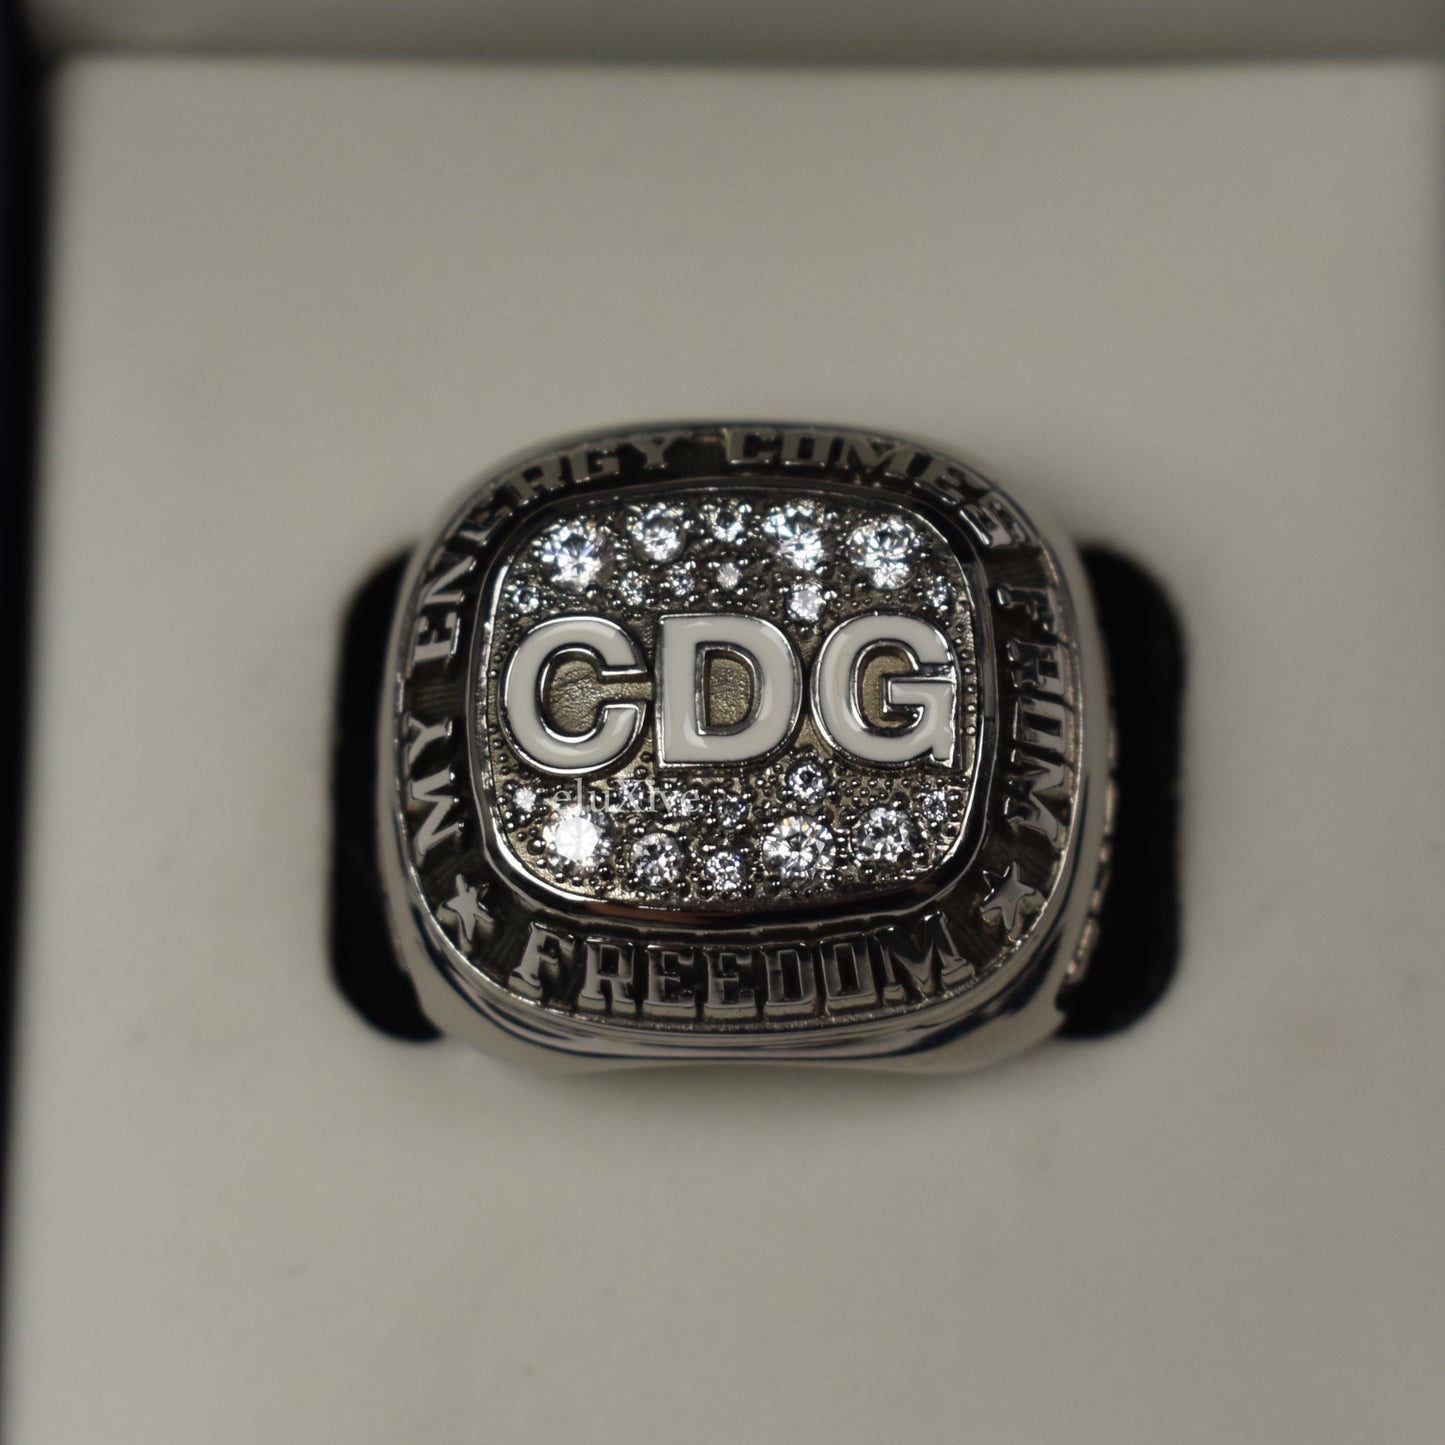 Comme Des Garcons - CDG Championship Crystal Ring